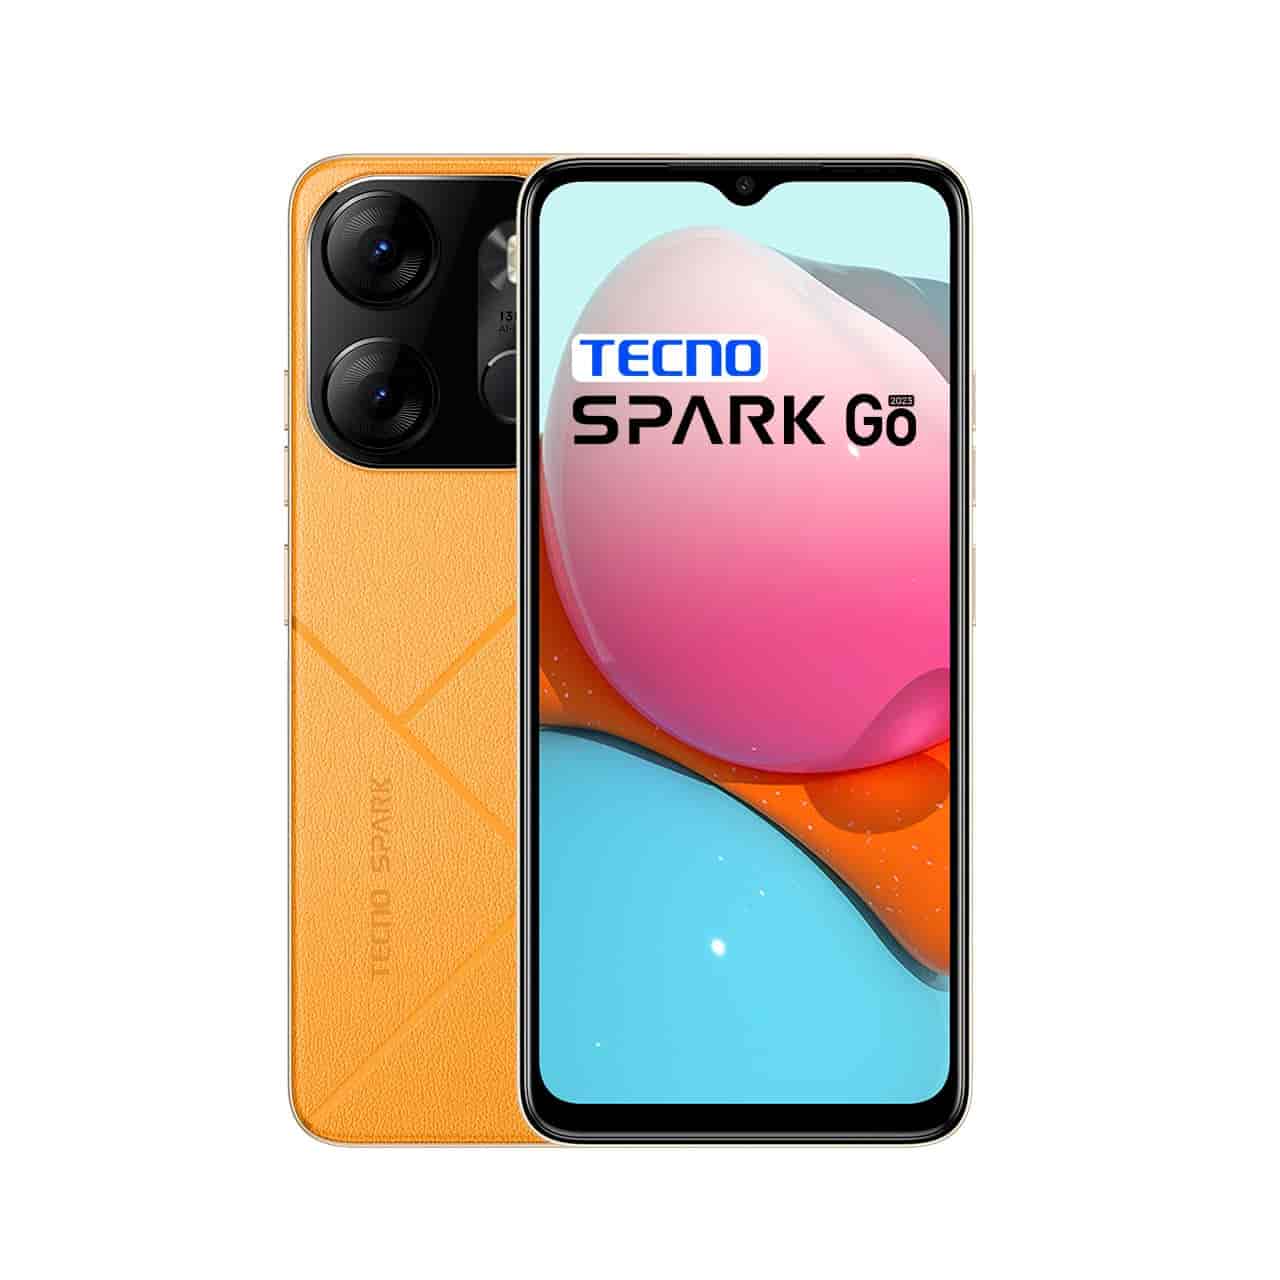 Tecno Spark Go 2023 BF7n Skin Orange 32GB 3GB RAM Gsm Unlocked Phone  Mediatek MT6761 Helio A22 DISPLAY 6.6 inches, Processor Mediatek MT6761  Helio A22 FRONT CAMERA 5MP REAR CAMERA 13MP RAM